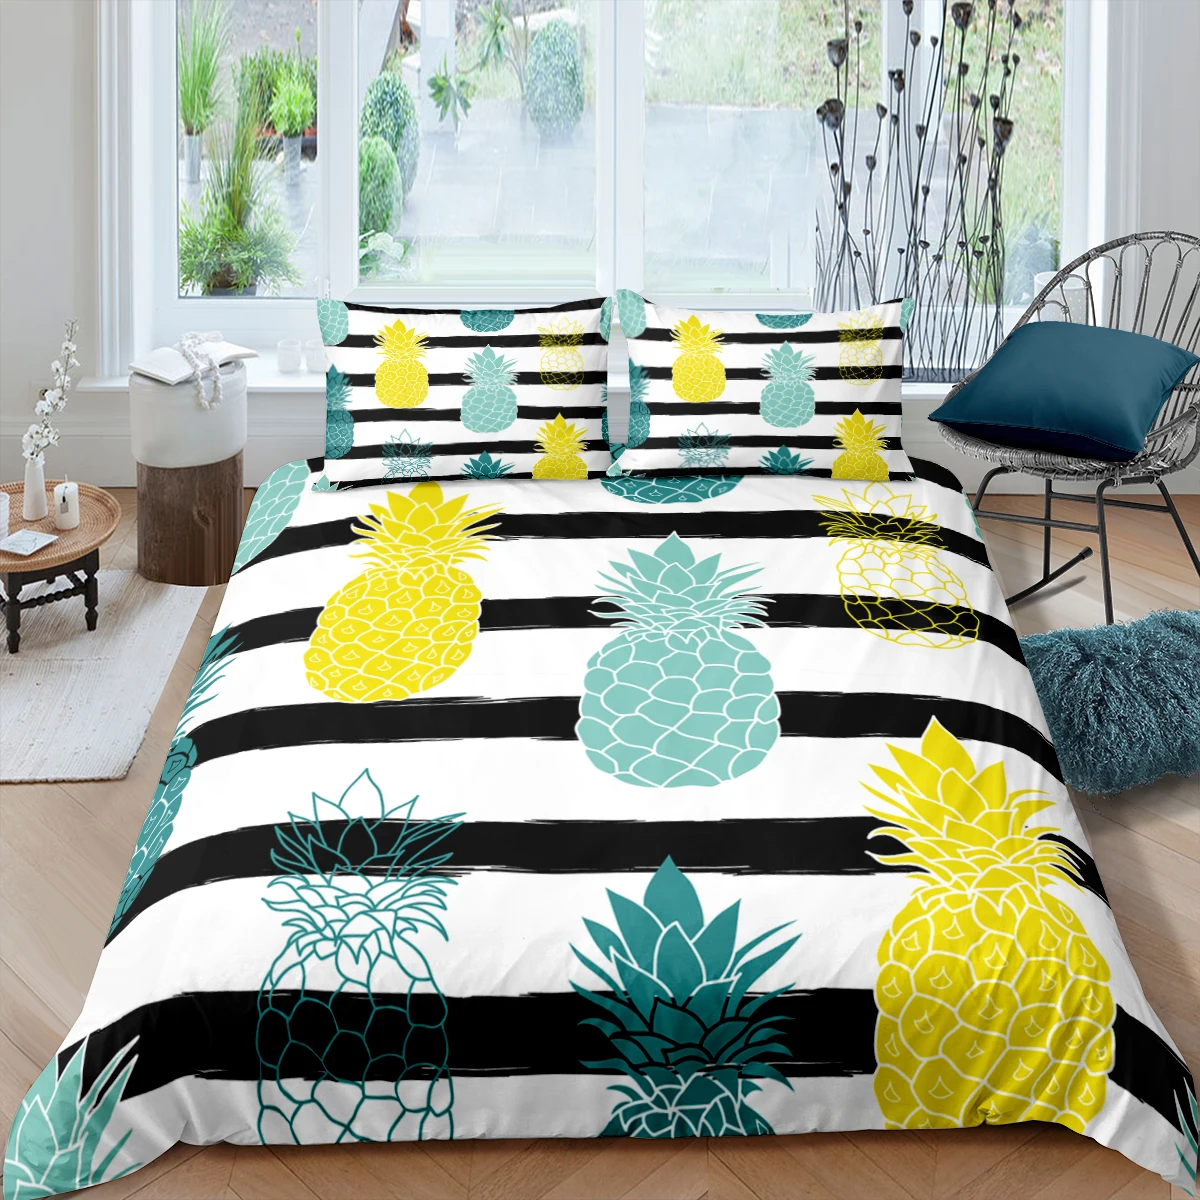 white comforter Home Textiles Luxury 3D Golden Pineapple Duvet Cover Set Pillowcase Fruit Bedding Set AU/EU/UK/US Queen and King Size Sets bedspread